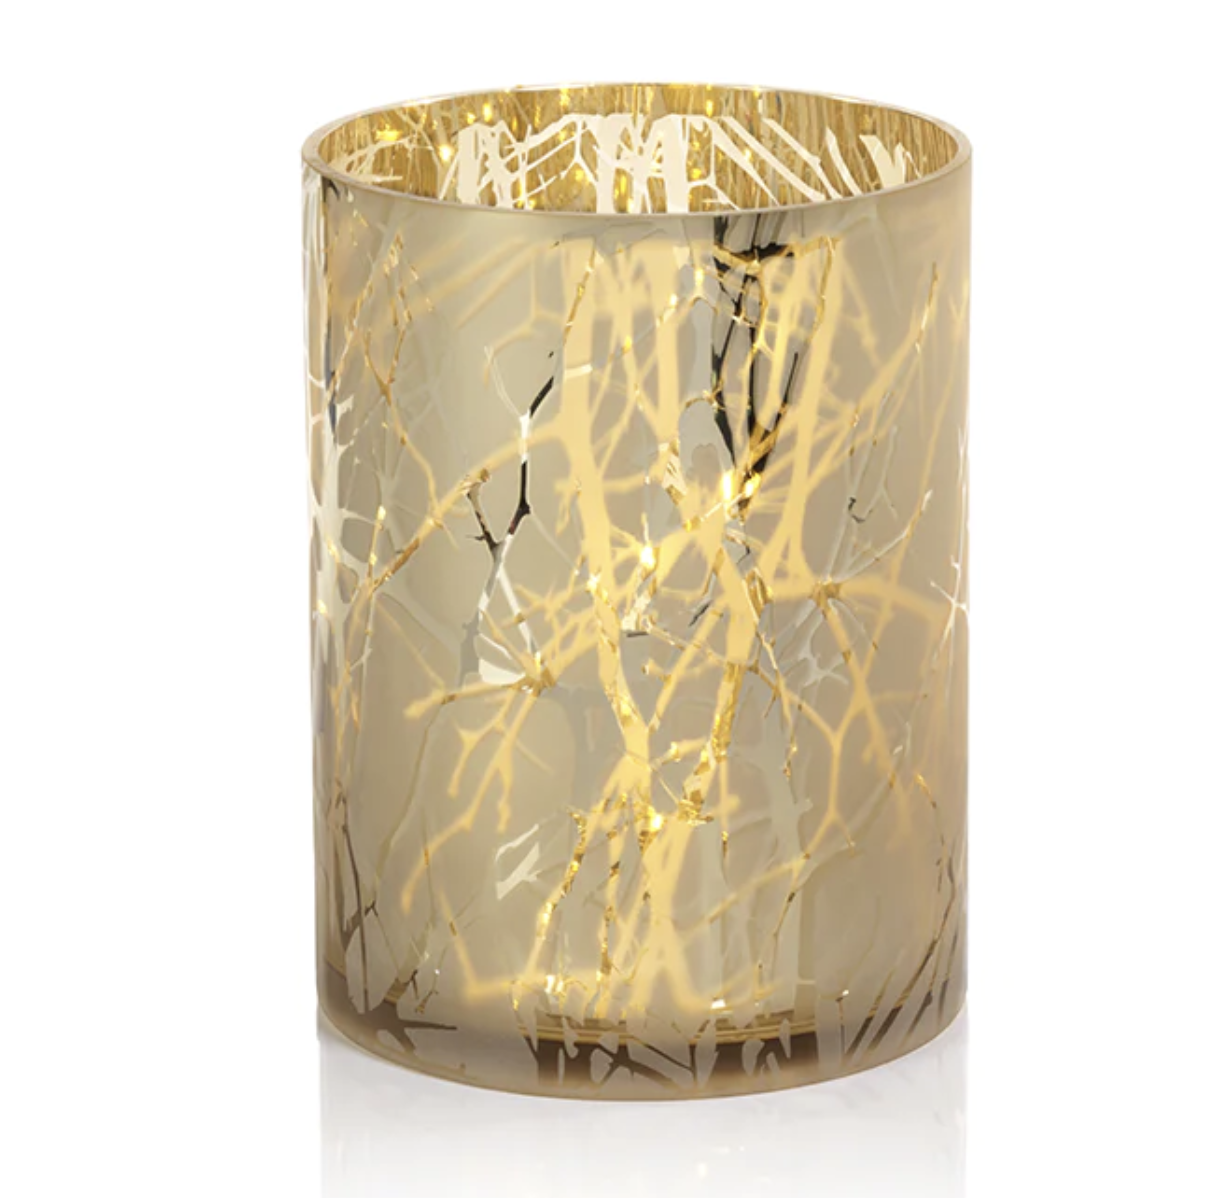 ZODAX Gold Plated Branch Design LED Glass Hurricane - Medium